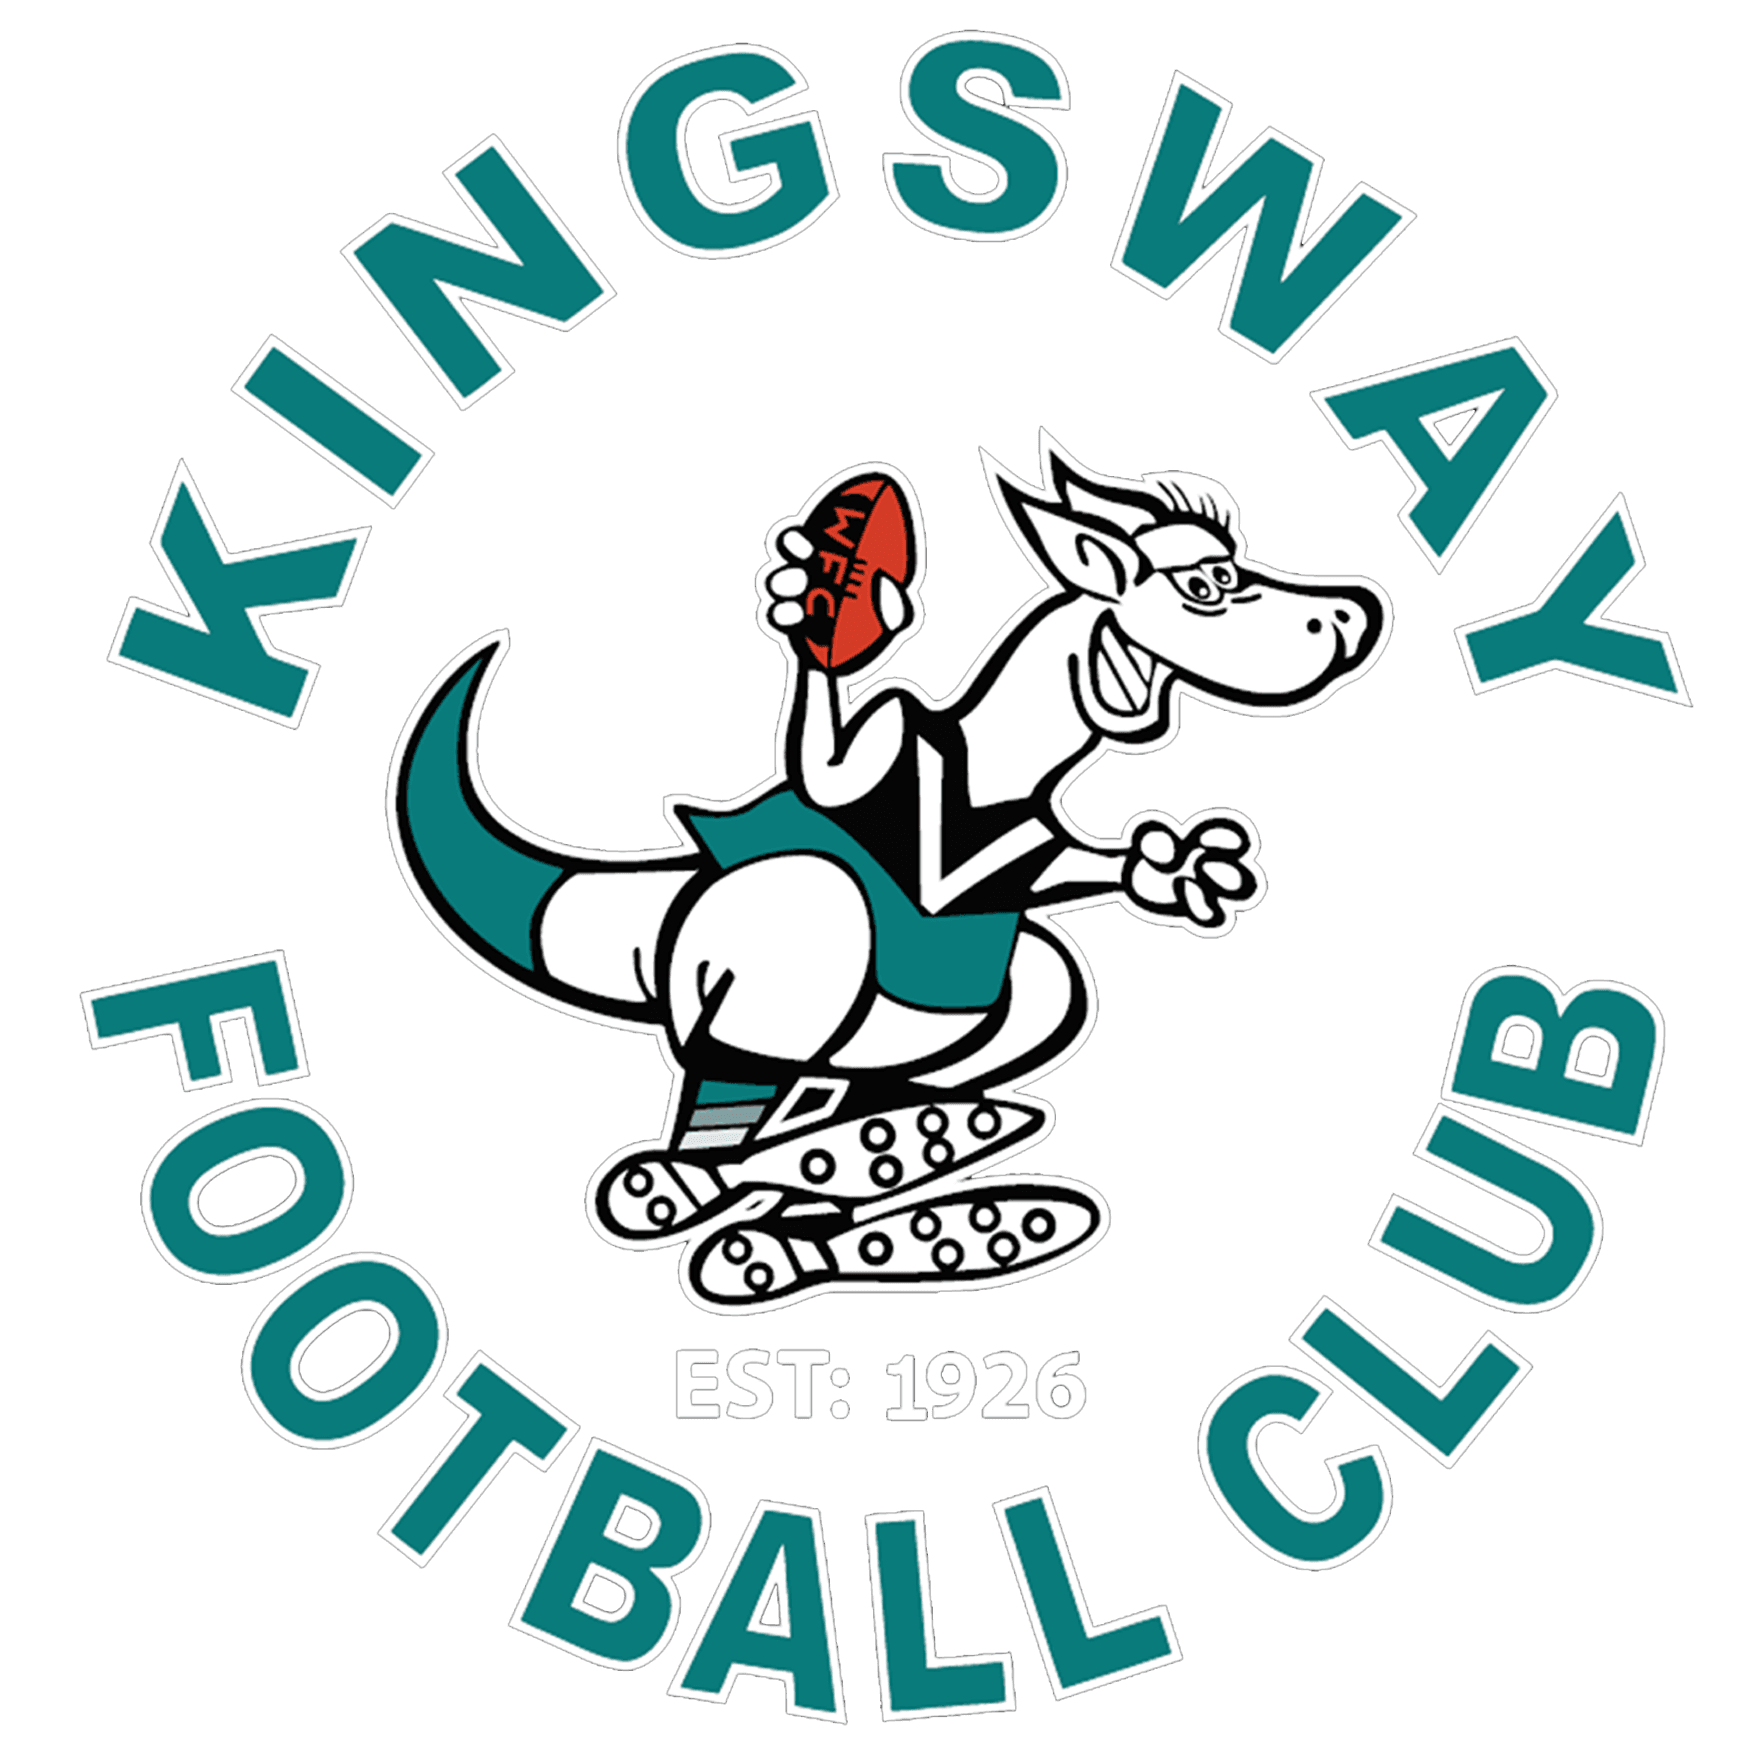 Away club logo